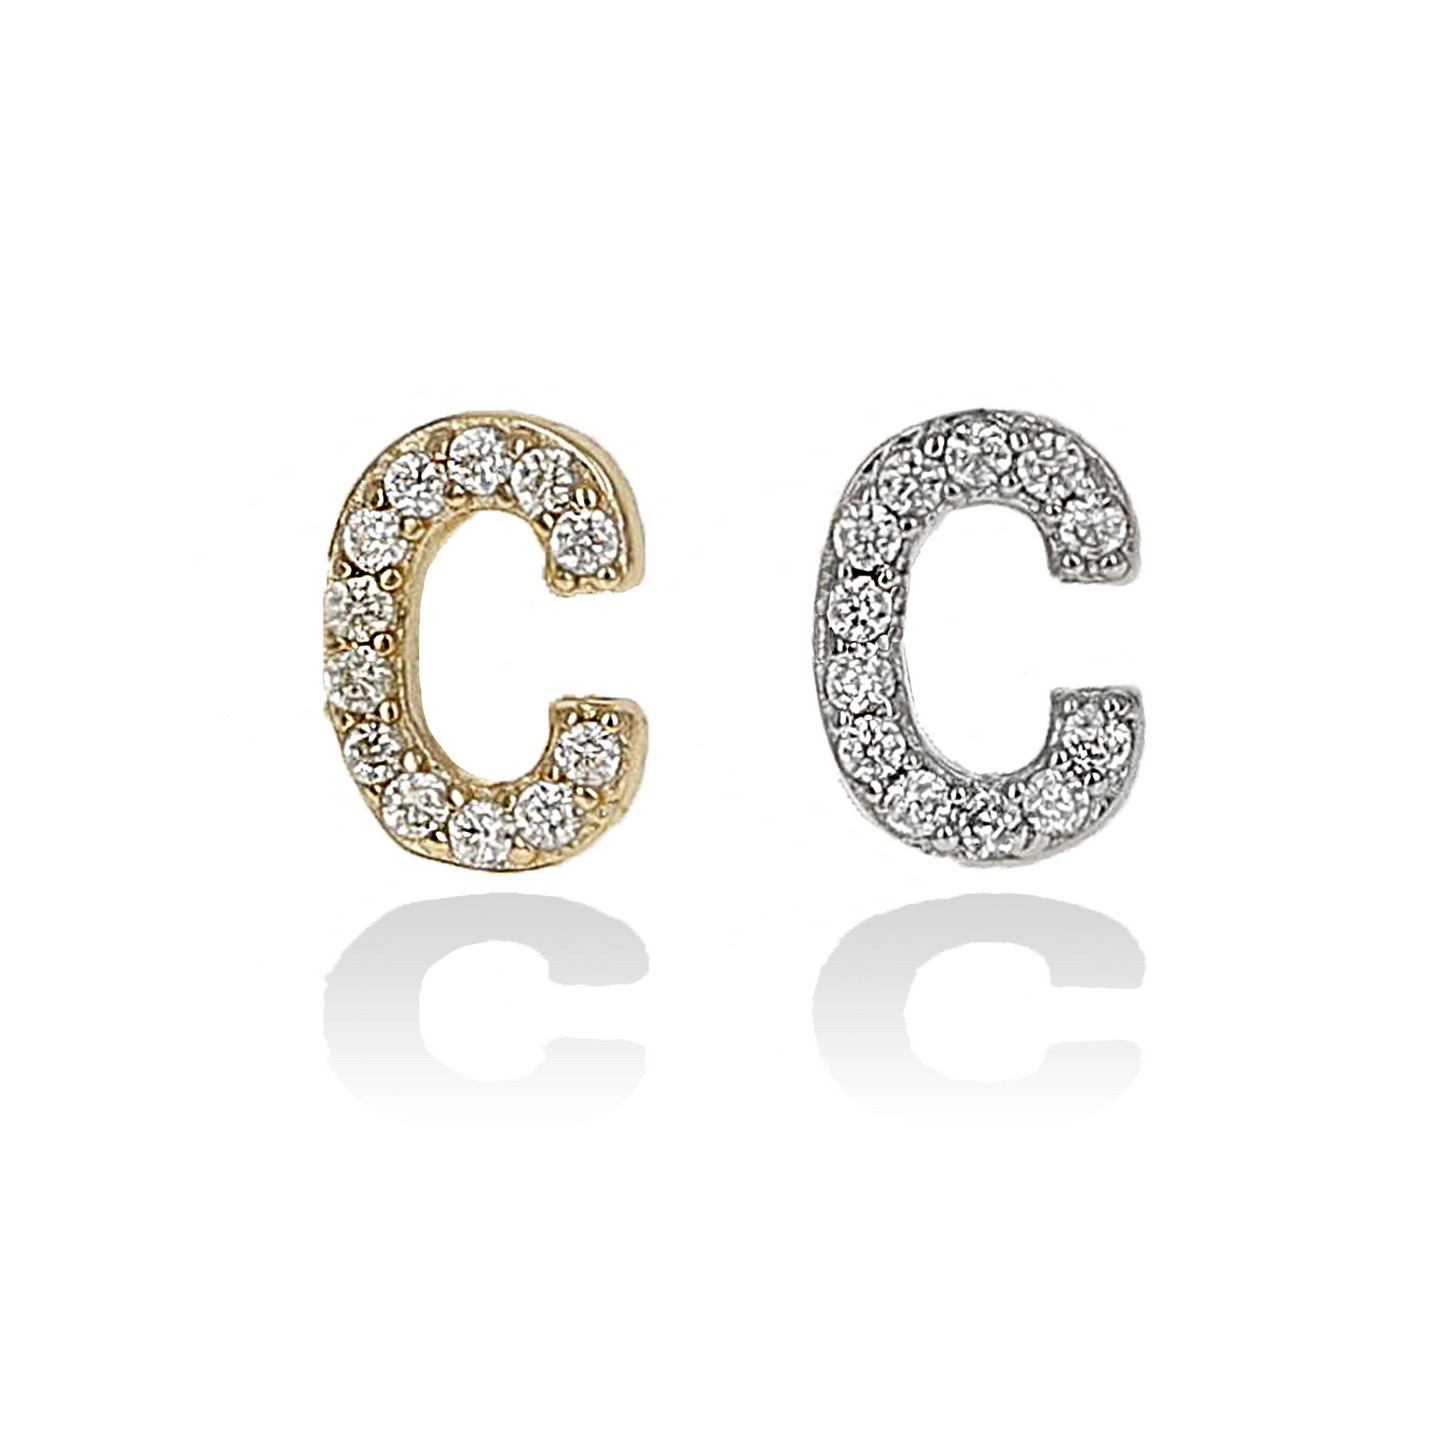 Individual Letter C Stud Earrings - Alexandra Marks Jewelry